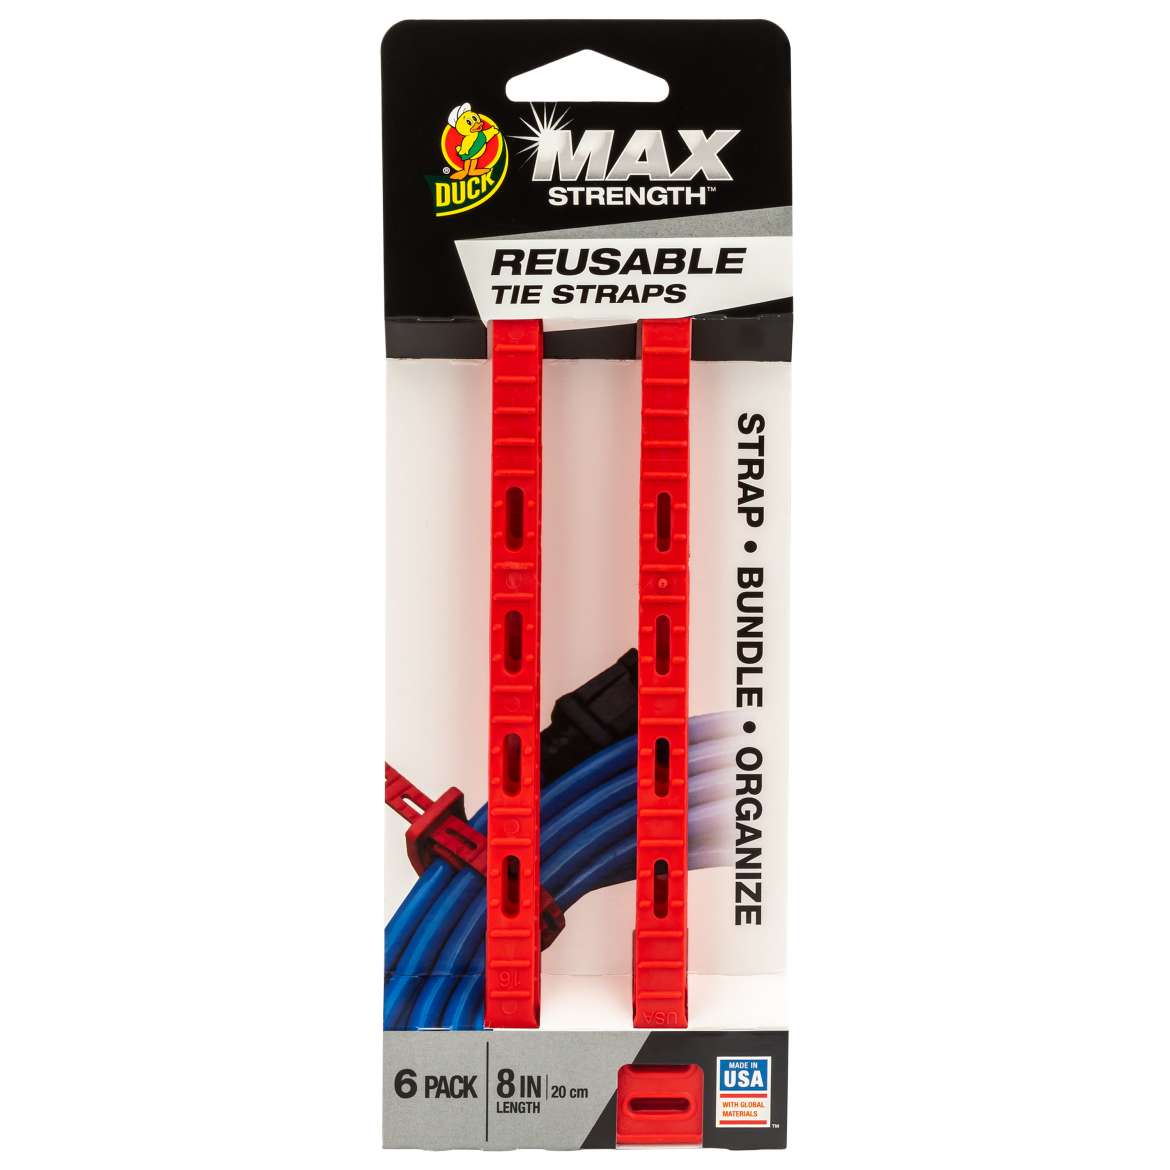 Duck® Max Tie Straps